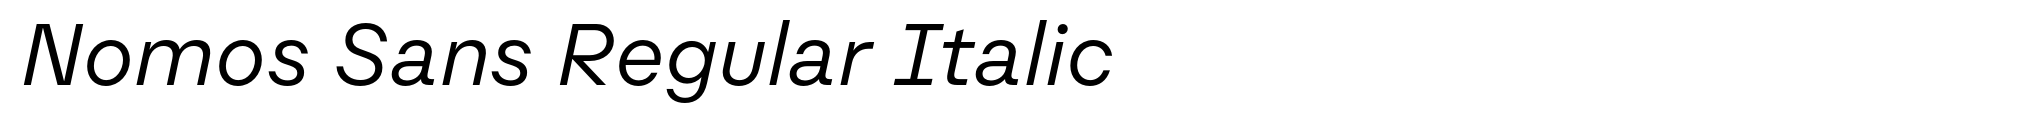 Nomos Sans Regular Italic image